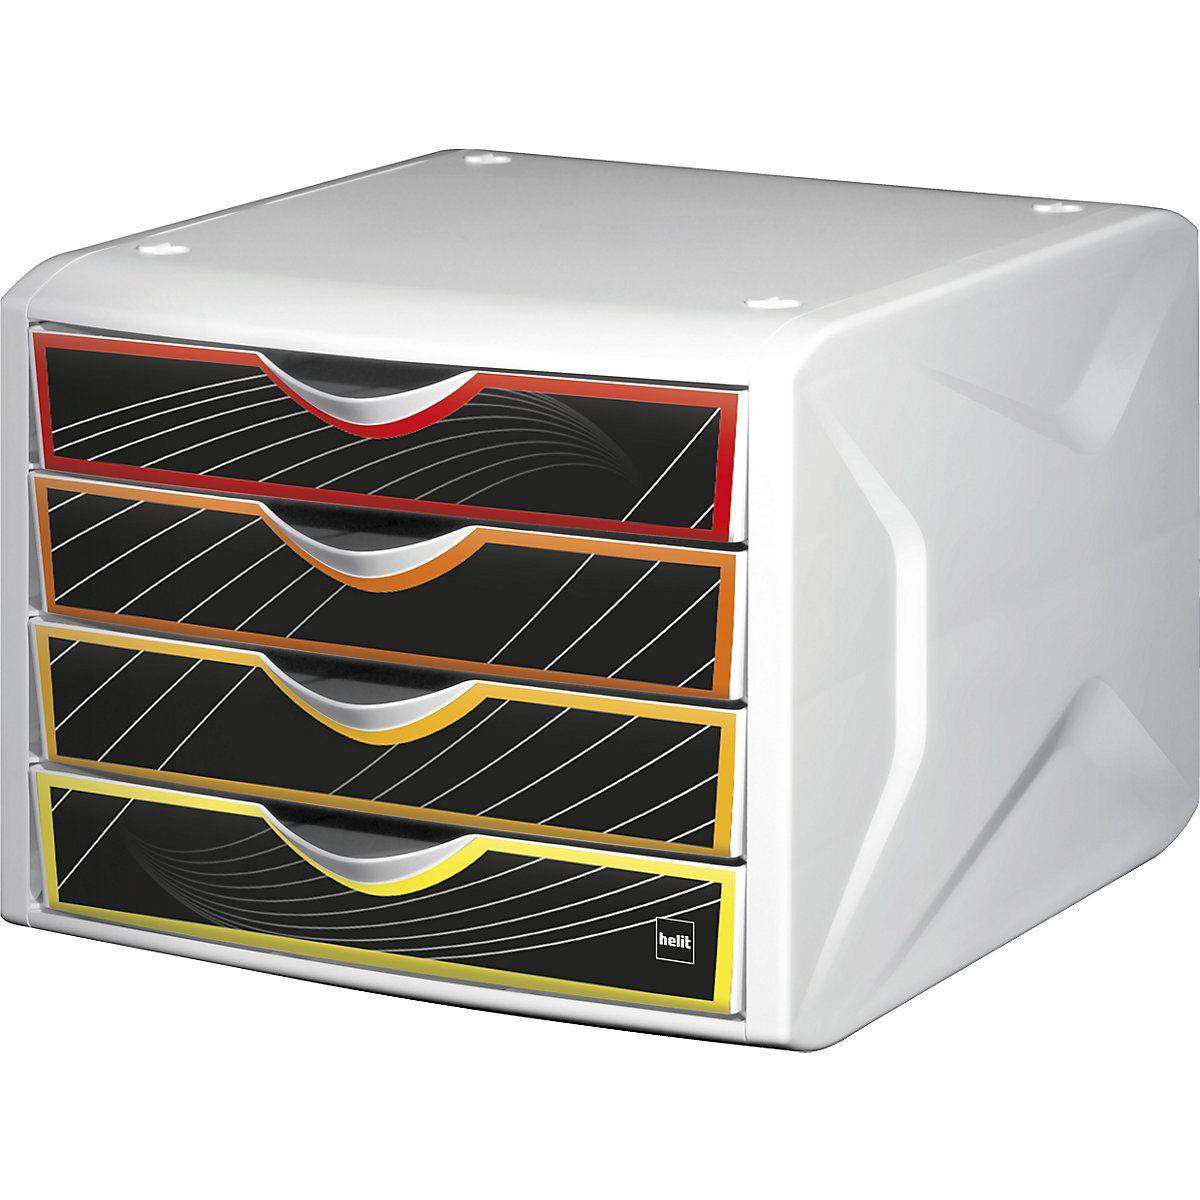 Cutie cu sertare – helit, î. x lăț. x ad. 212 x 262 x 330 mm, amb. 5 buc., design sertare priority